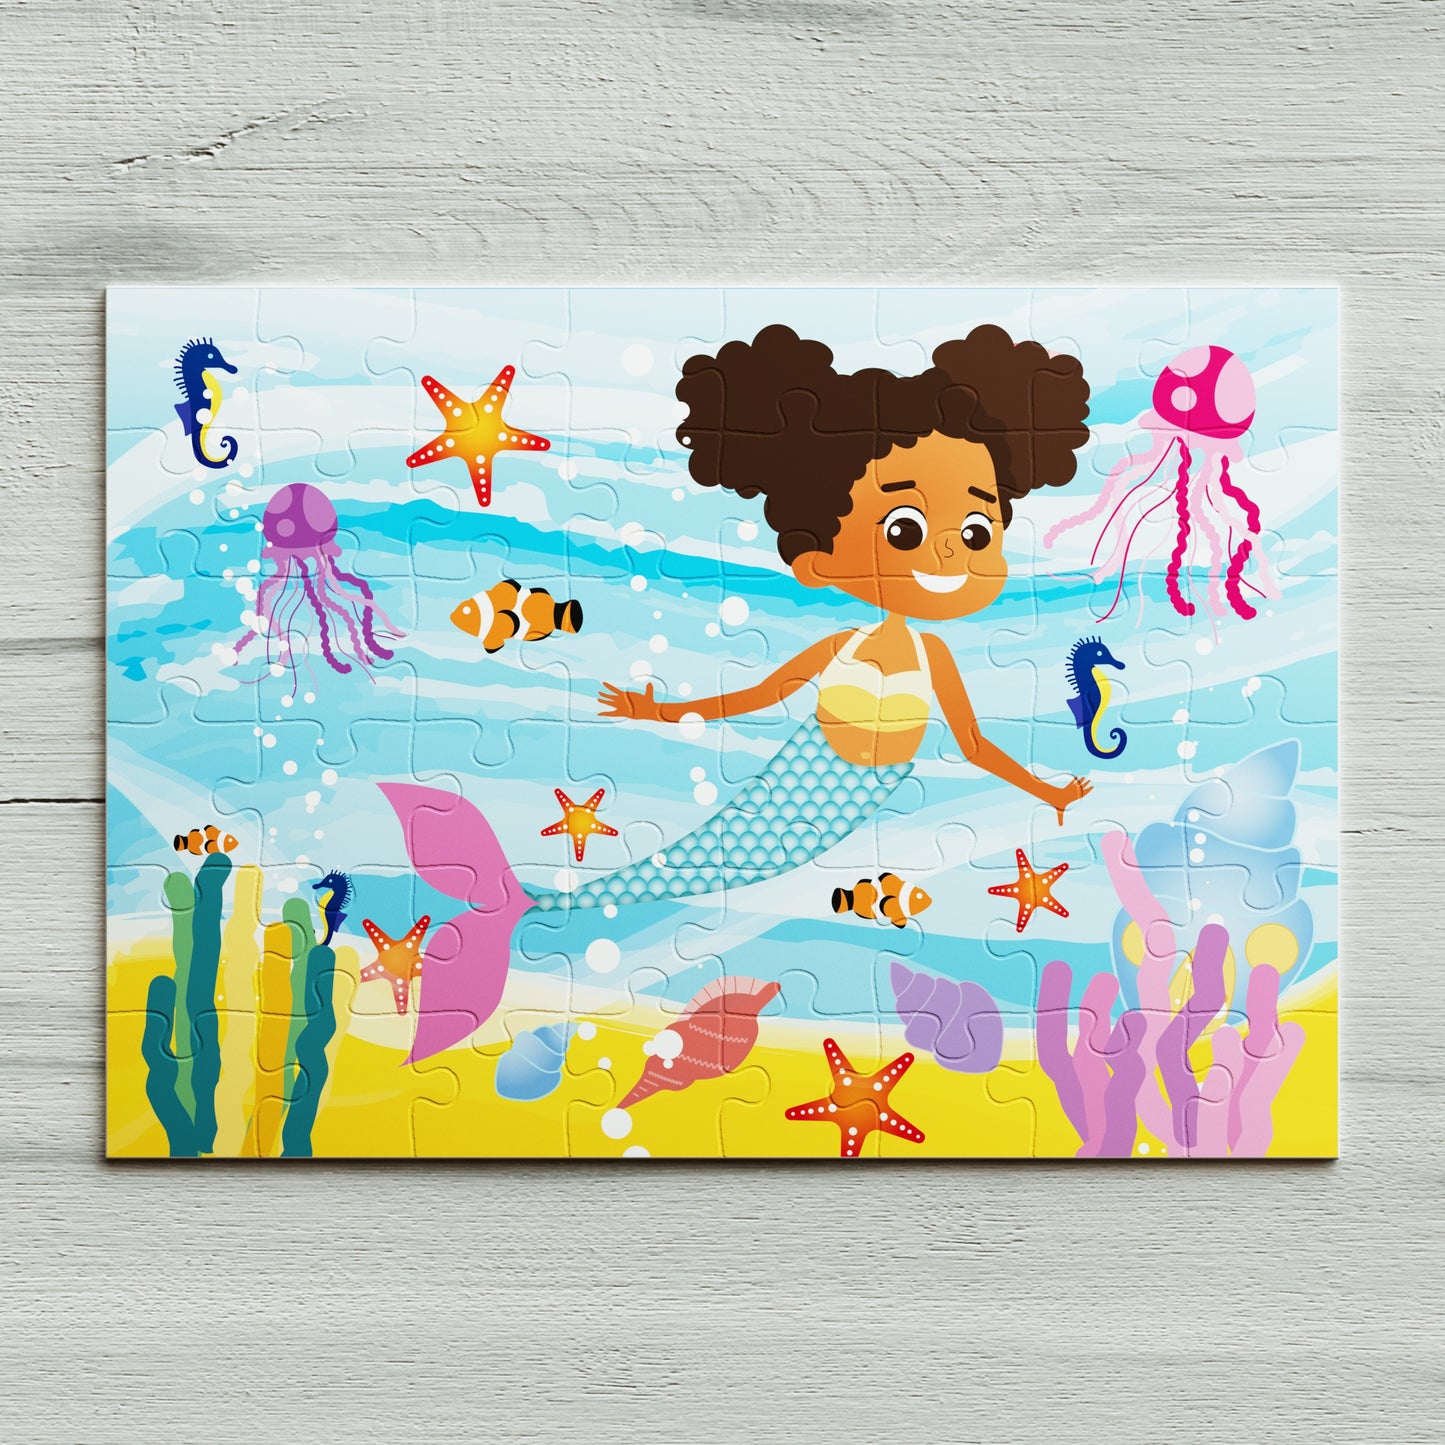 Kids mermaid jigsaw puzzle birthday gift. Smiling black mermaid with afro hair